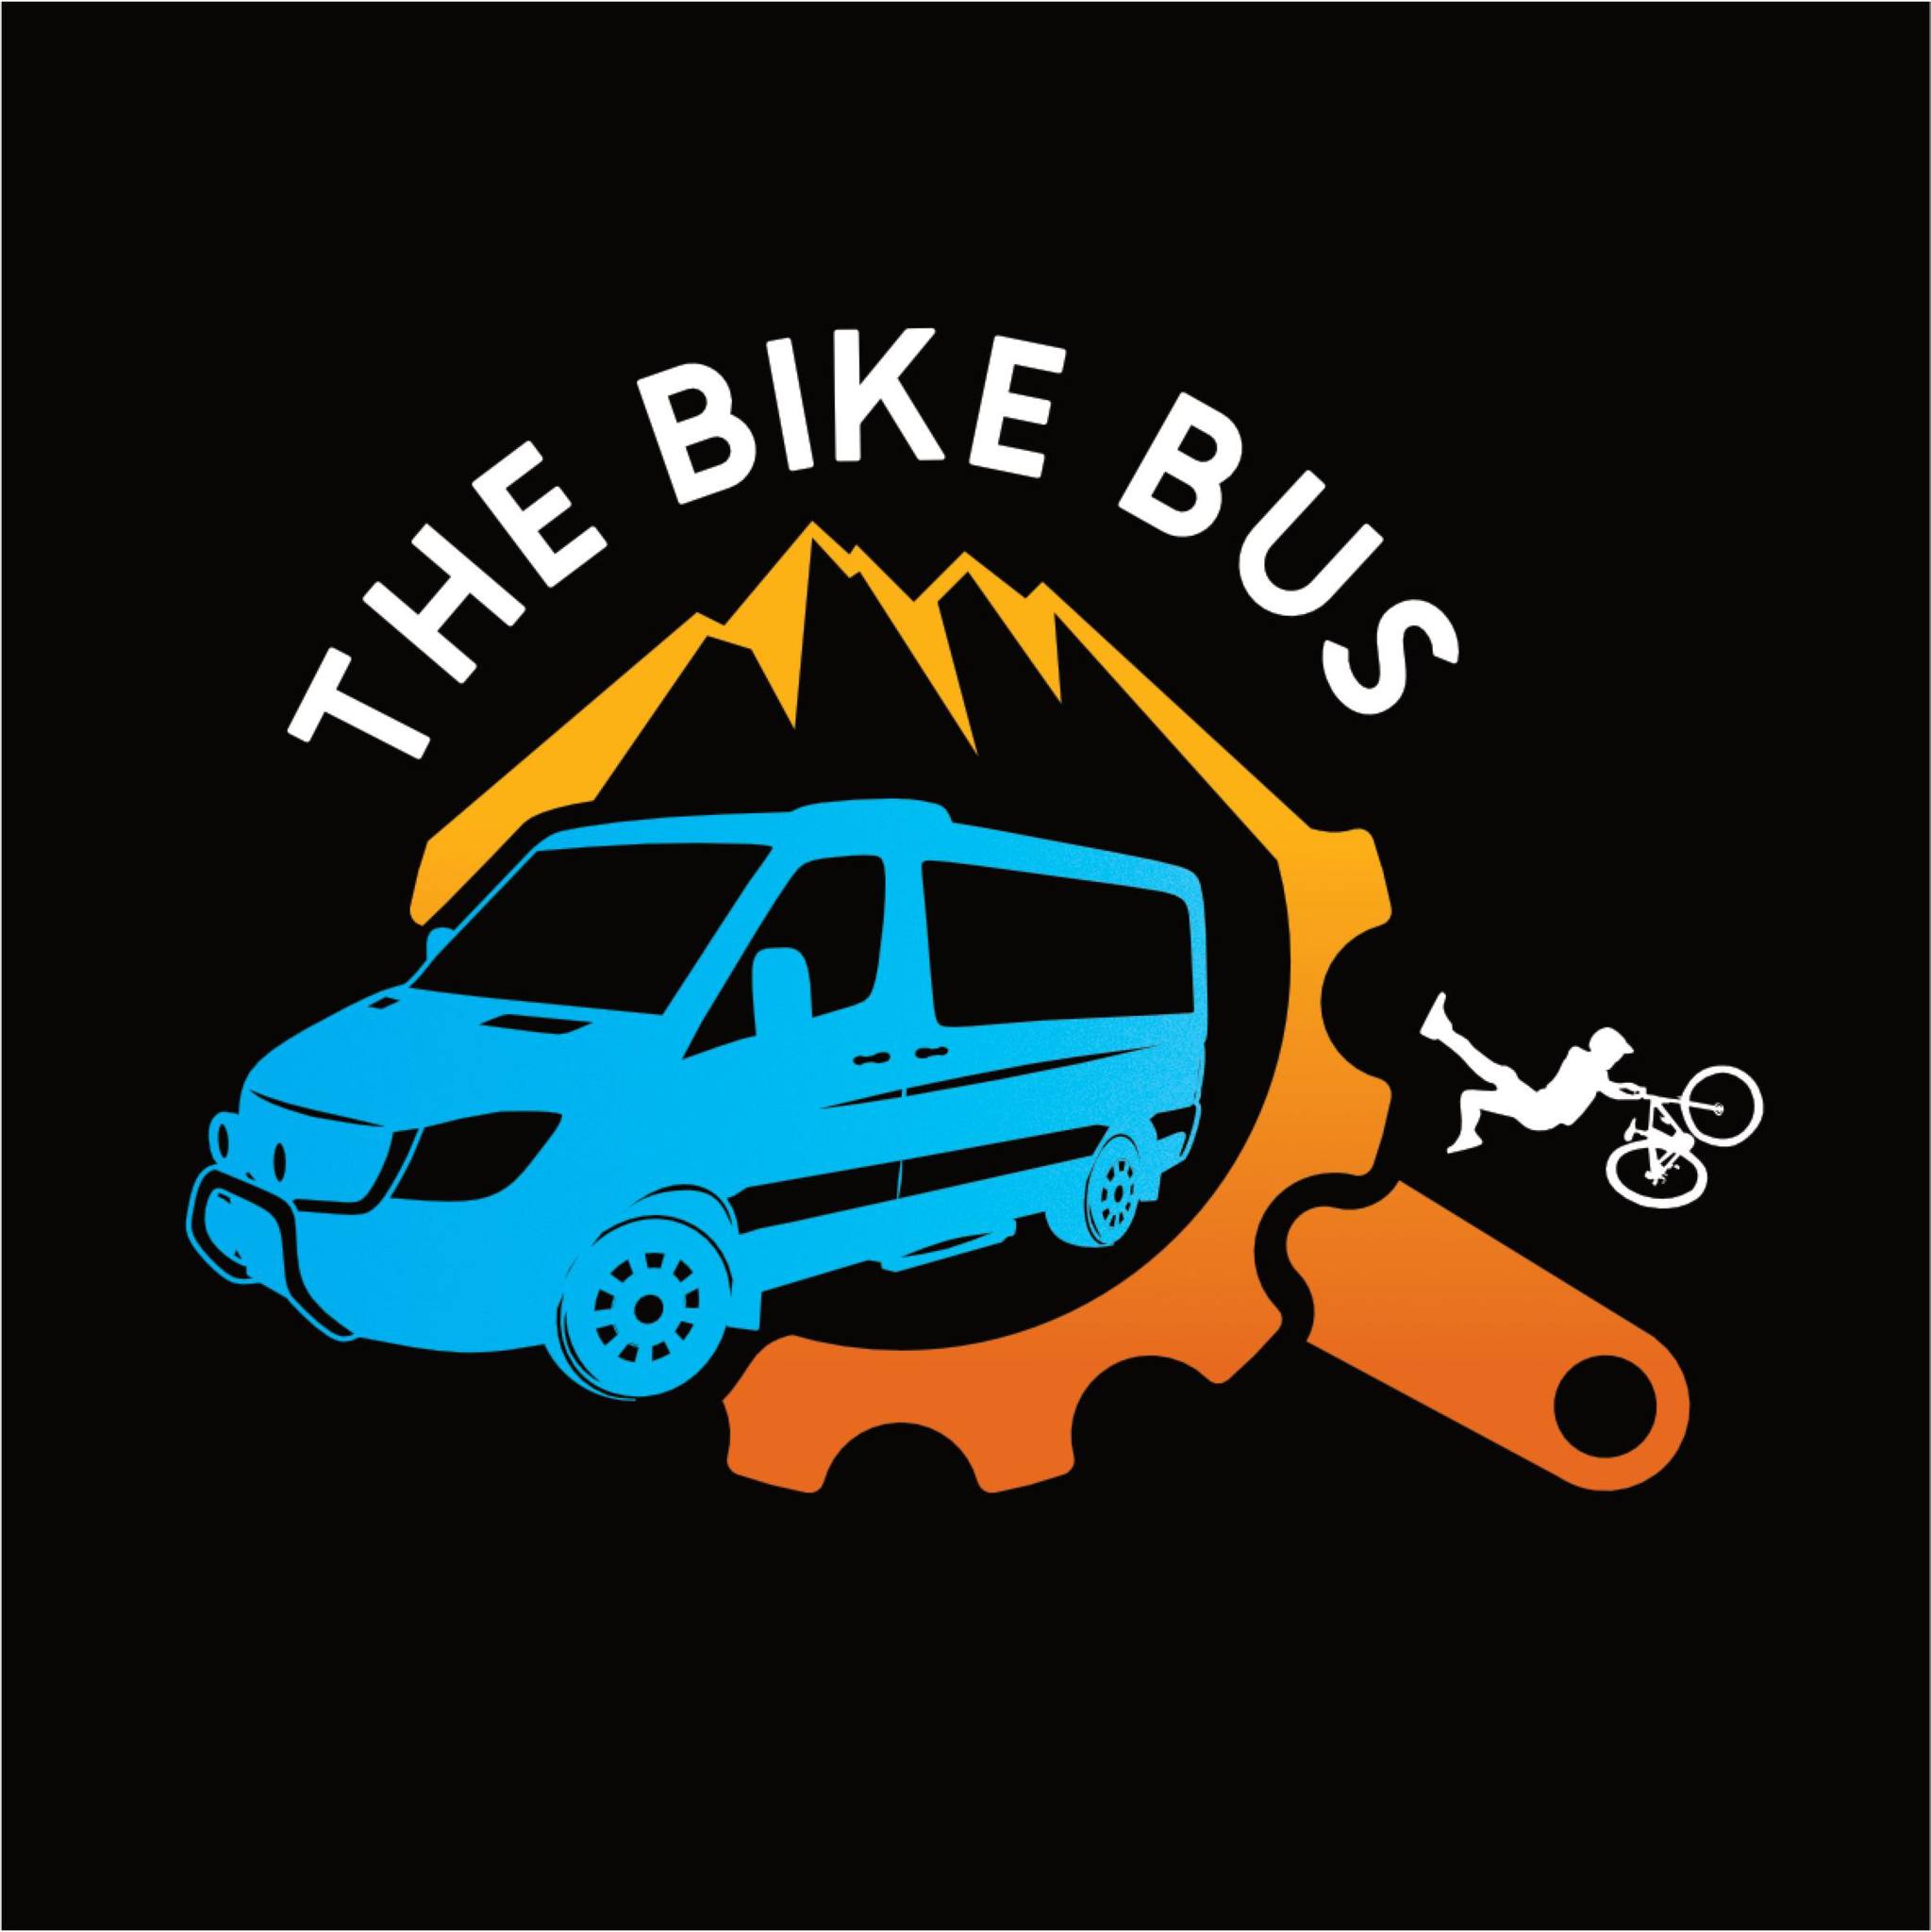 The Bike Bus logo